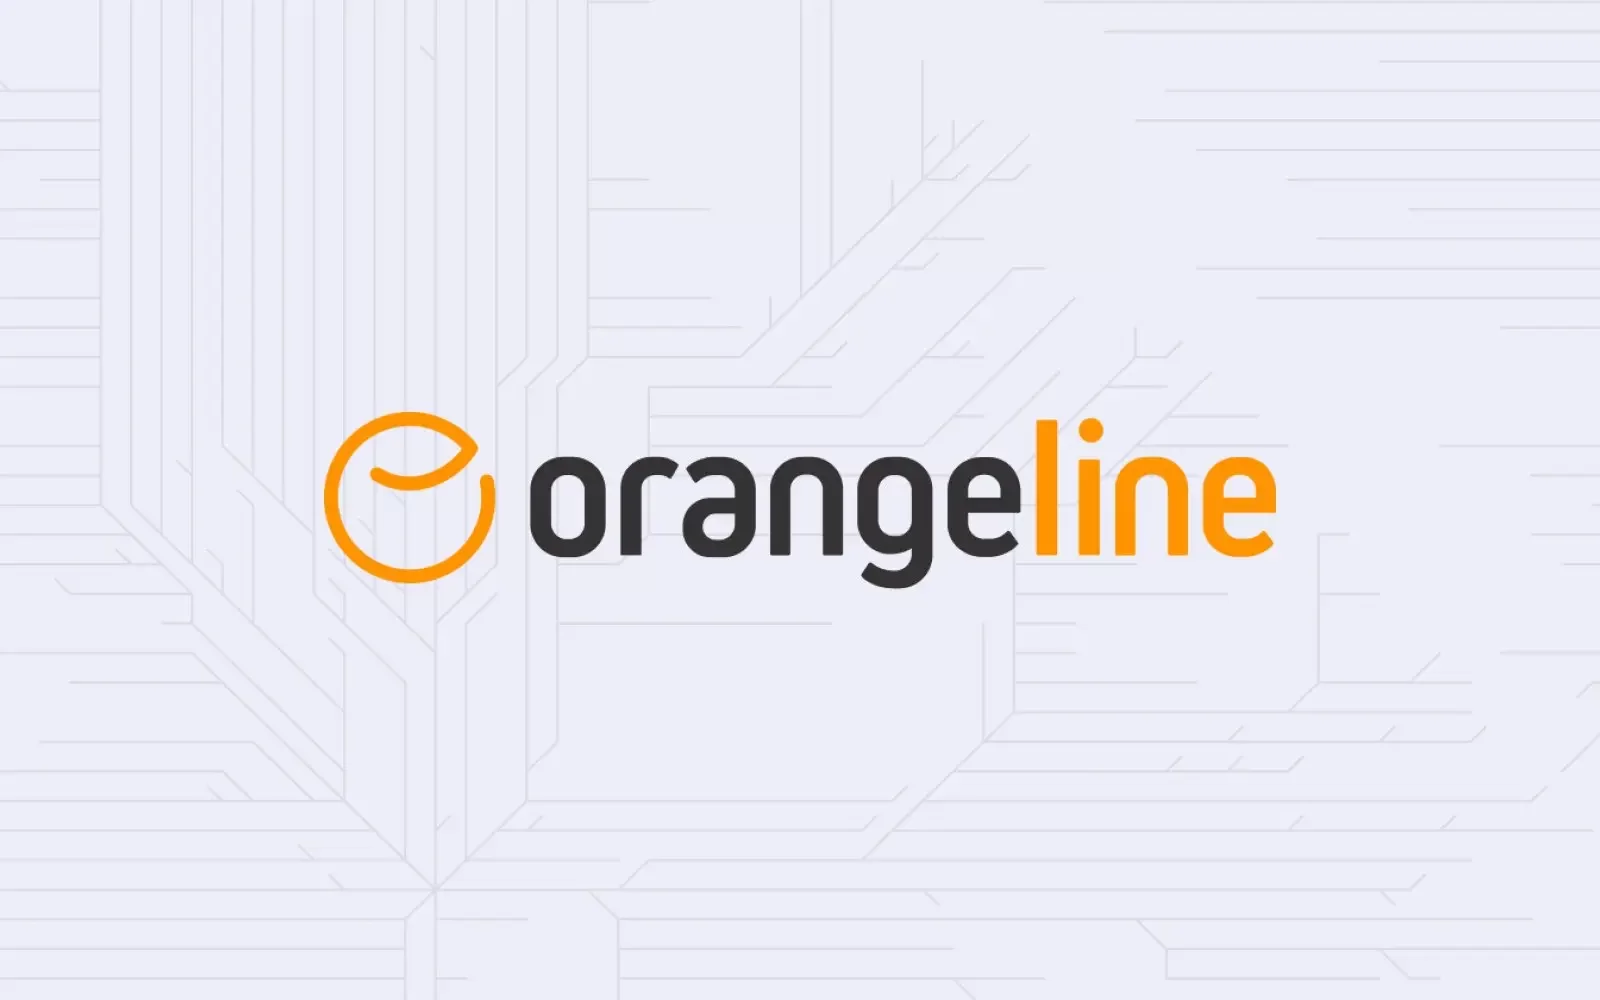 Orangeline